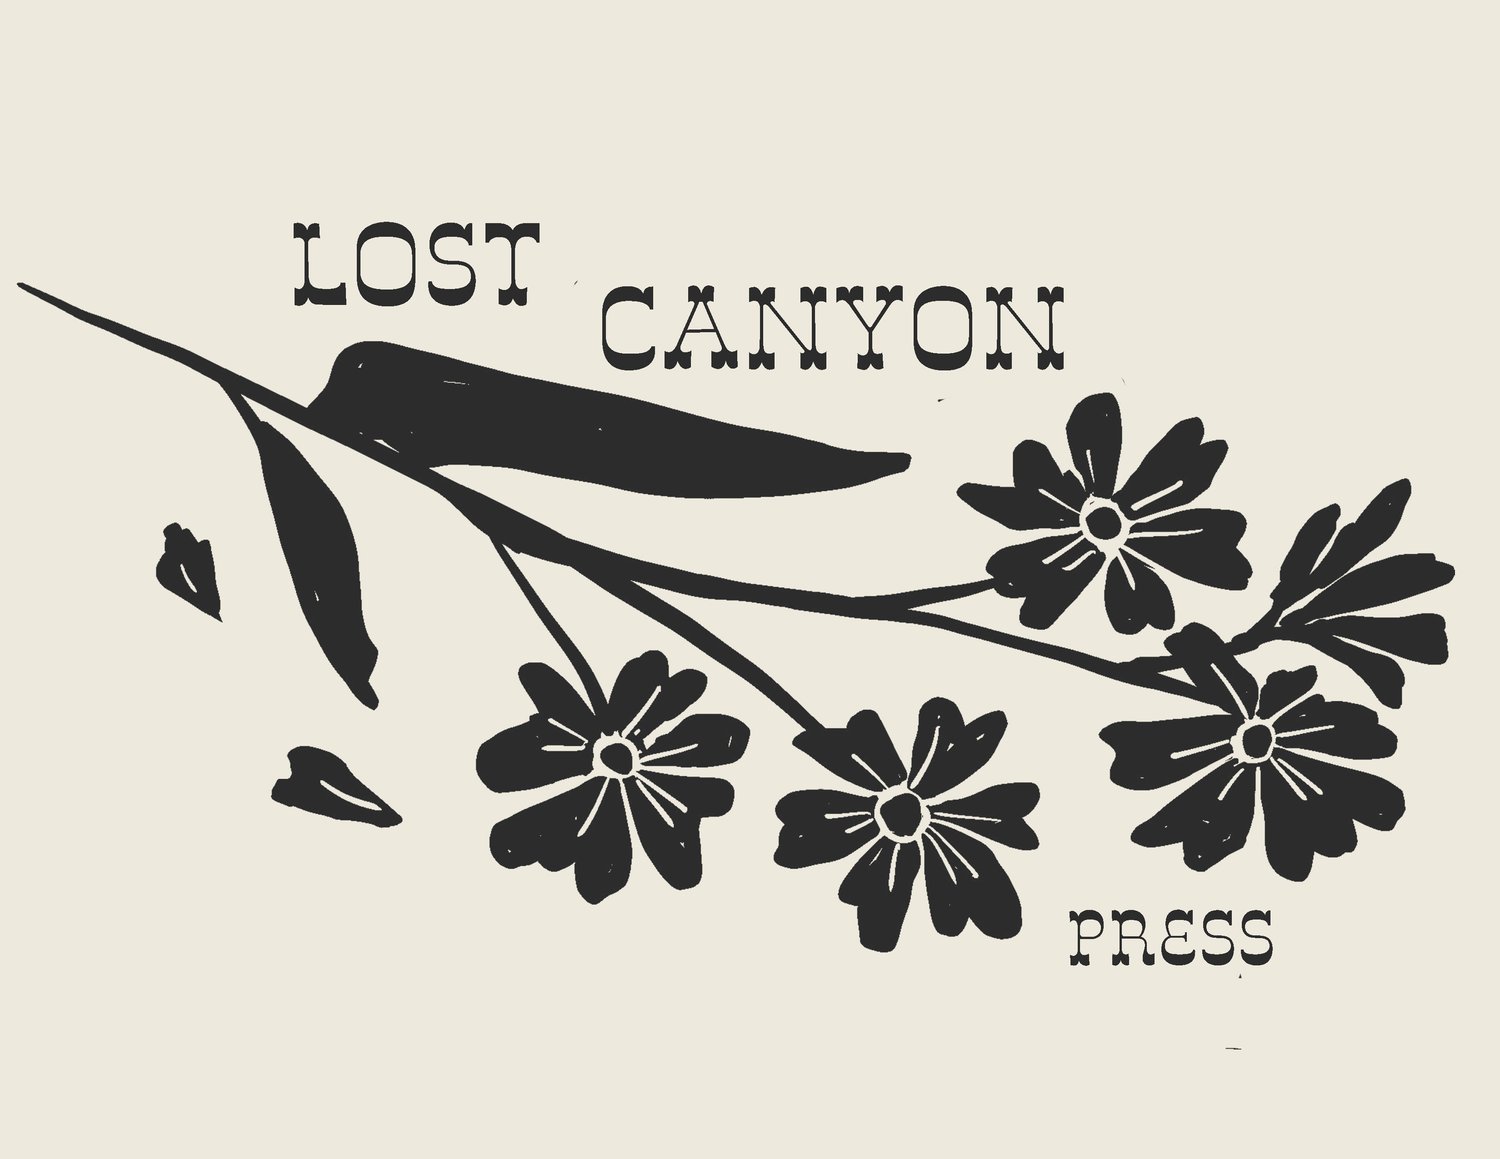 LOST CANYON PRESS